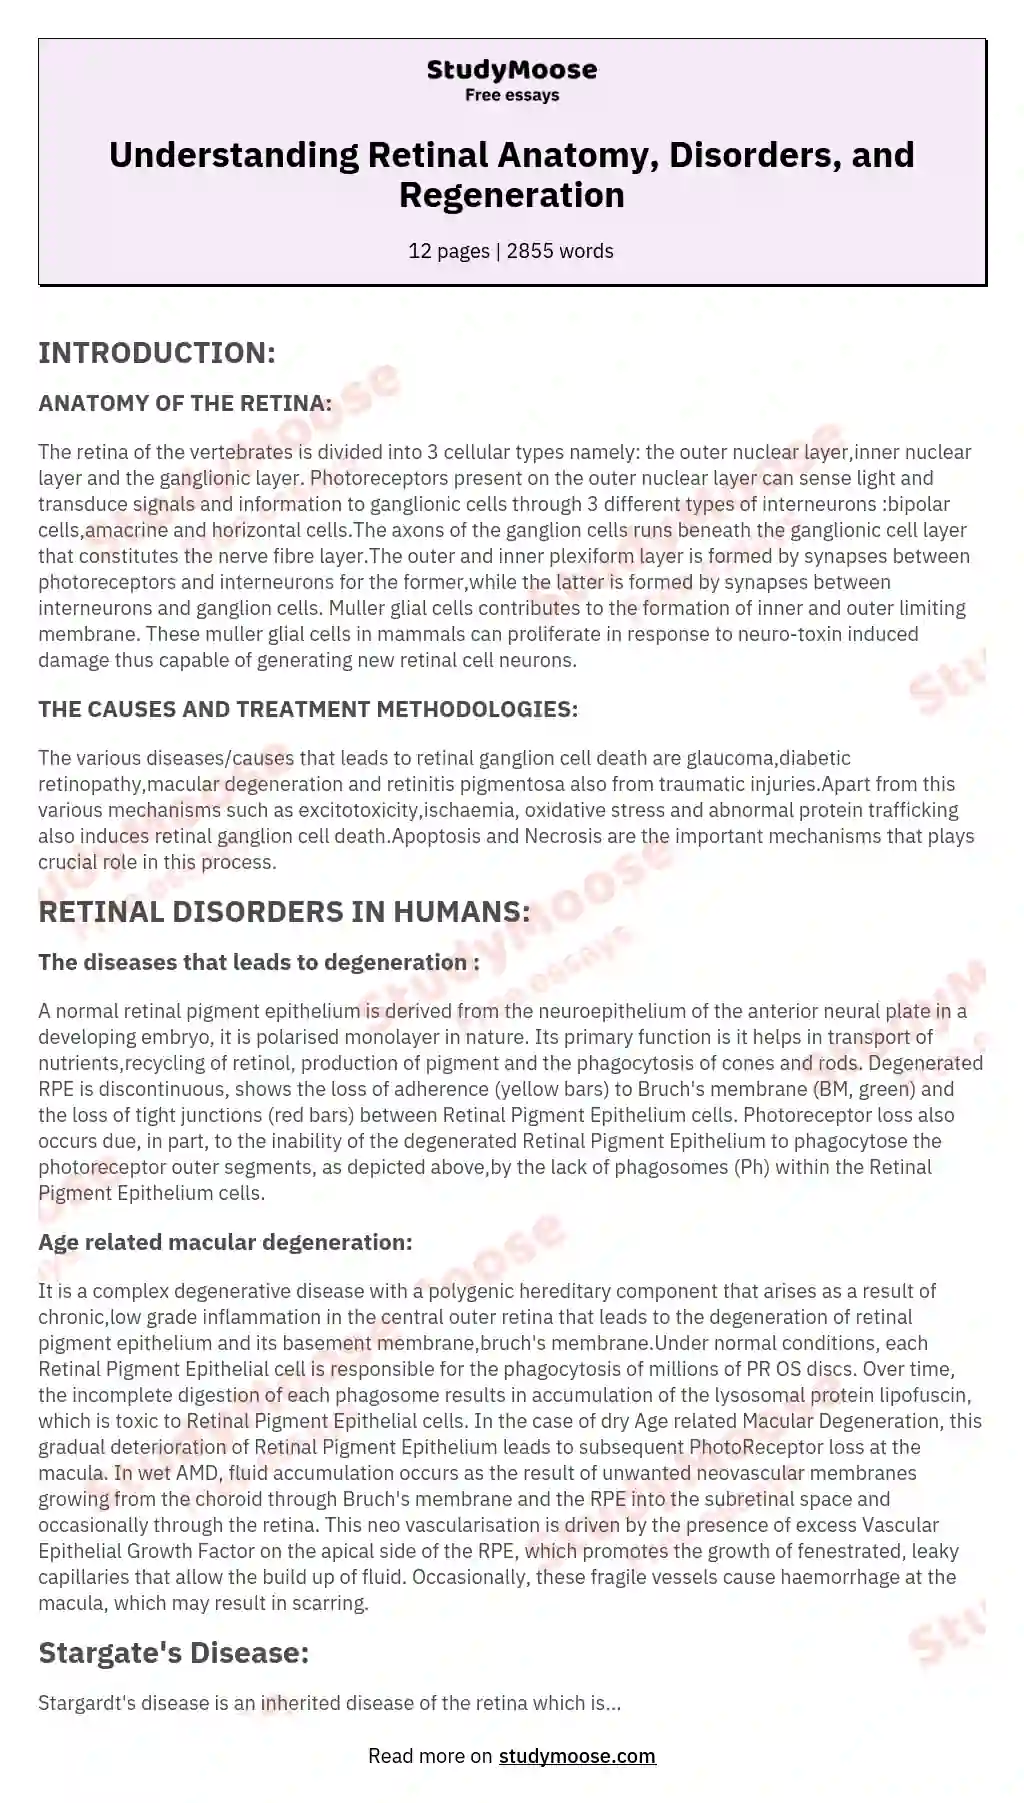 Understanding Retinal Anatomy, Disorders, and Regeneration essay